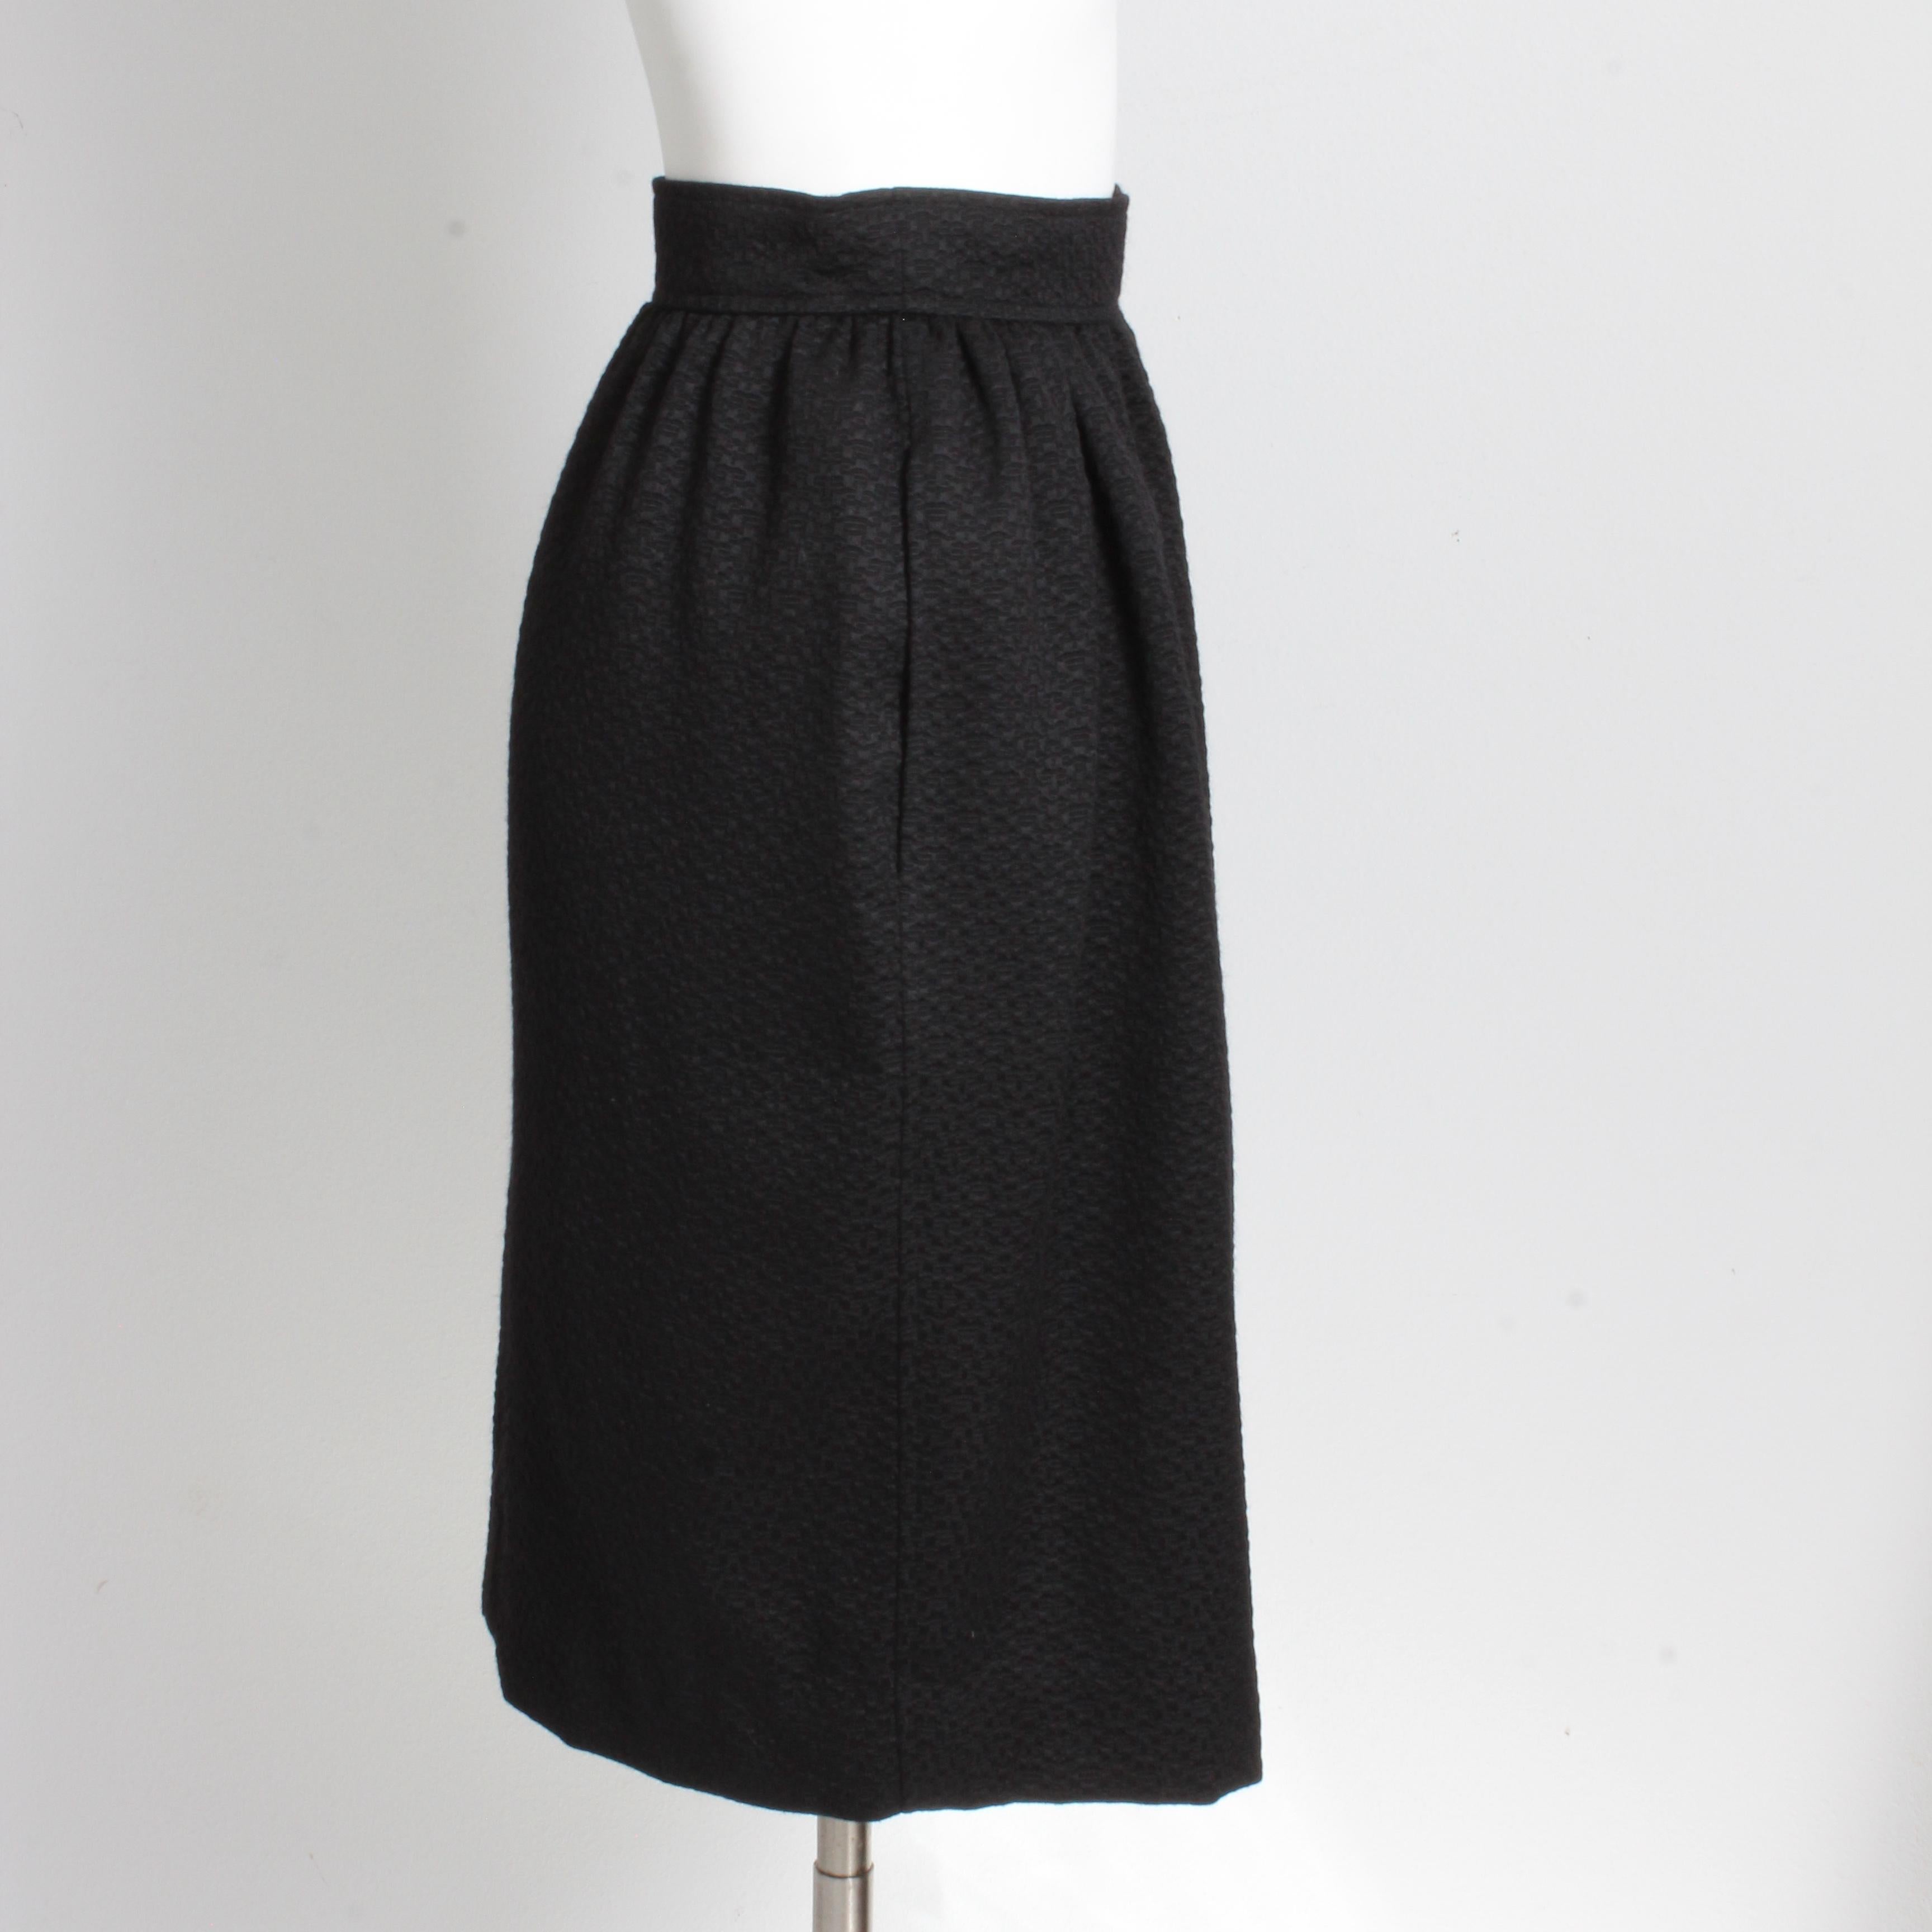 Yves Saint Laurent Skirt Pencil Black Textured Knit YSL Rive Gauche Size 38 90s For Sale 5